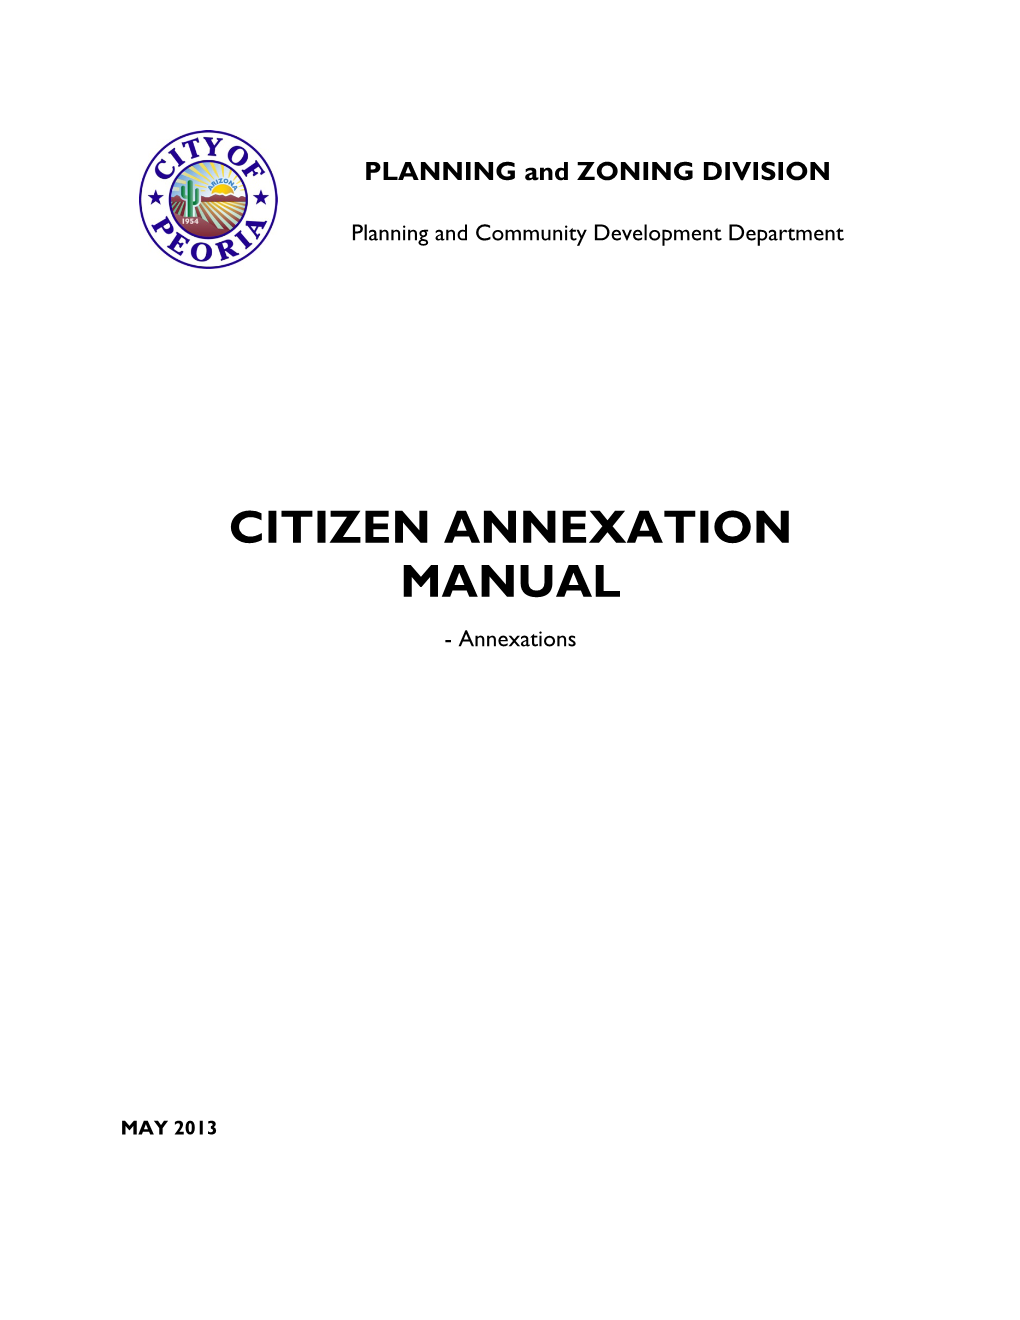 Citizen Annexation Manual